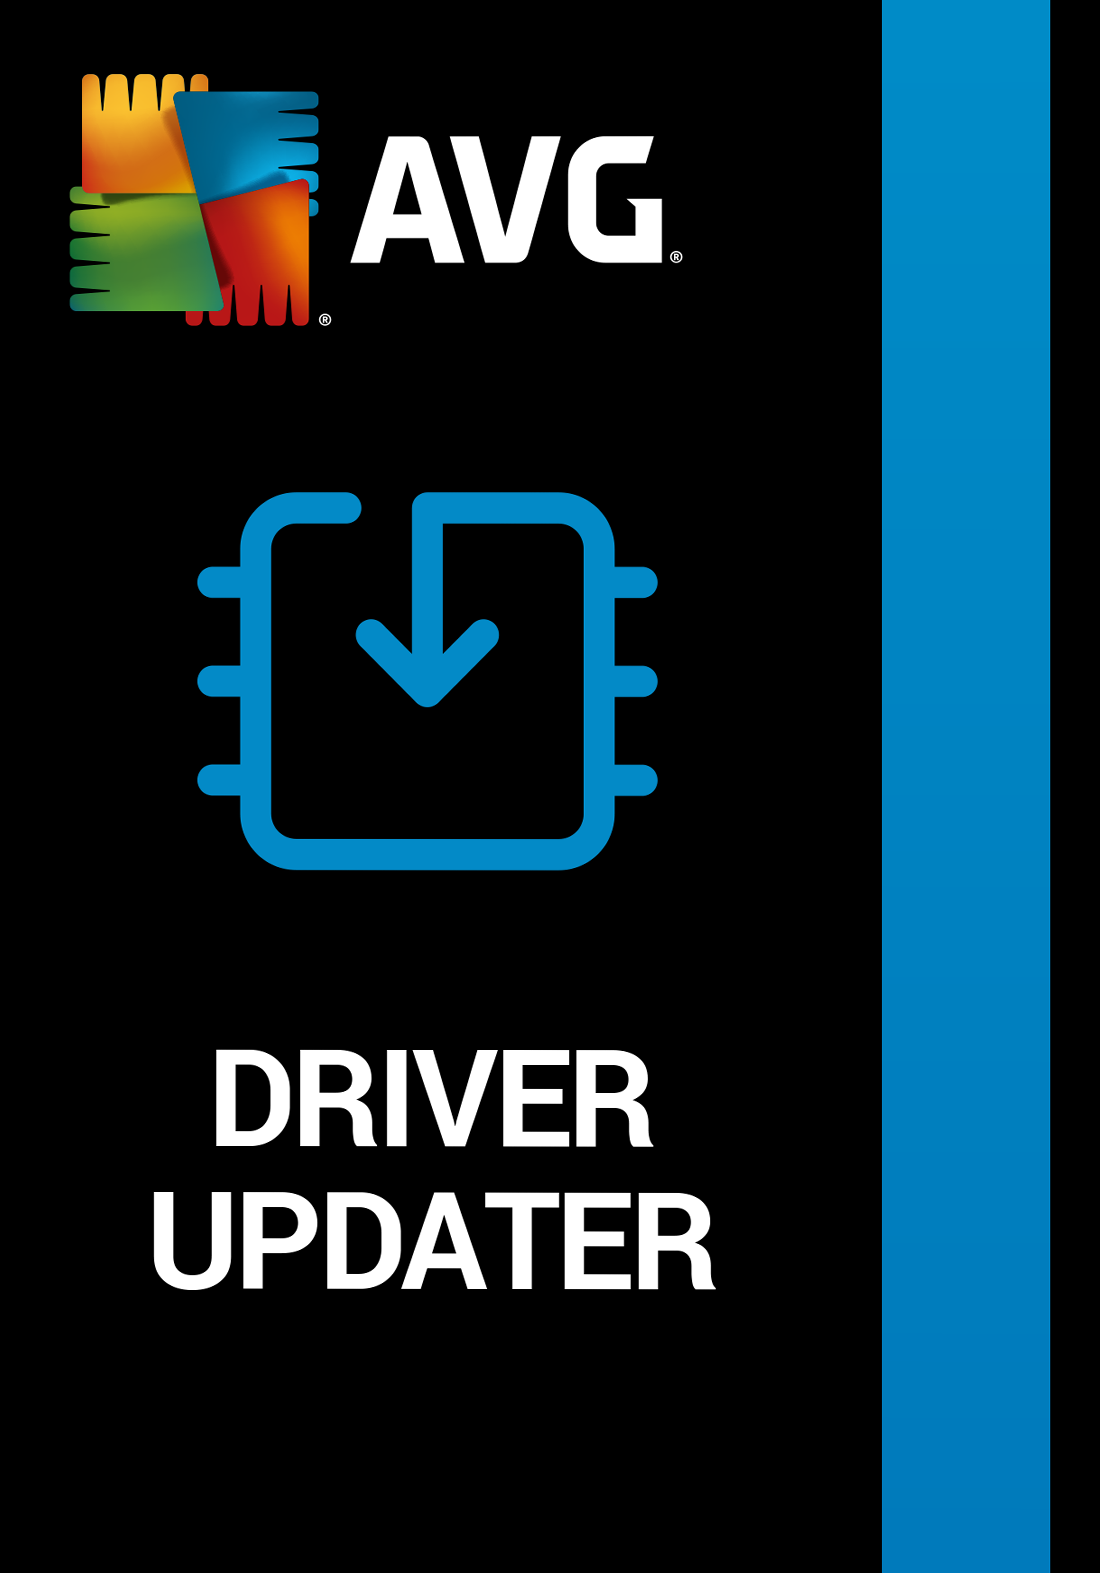 Se AVG Driver Updater - 1 enhed / 1 år hos e-Gear.dk